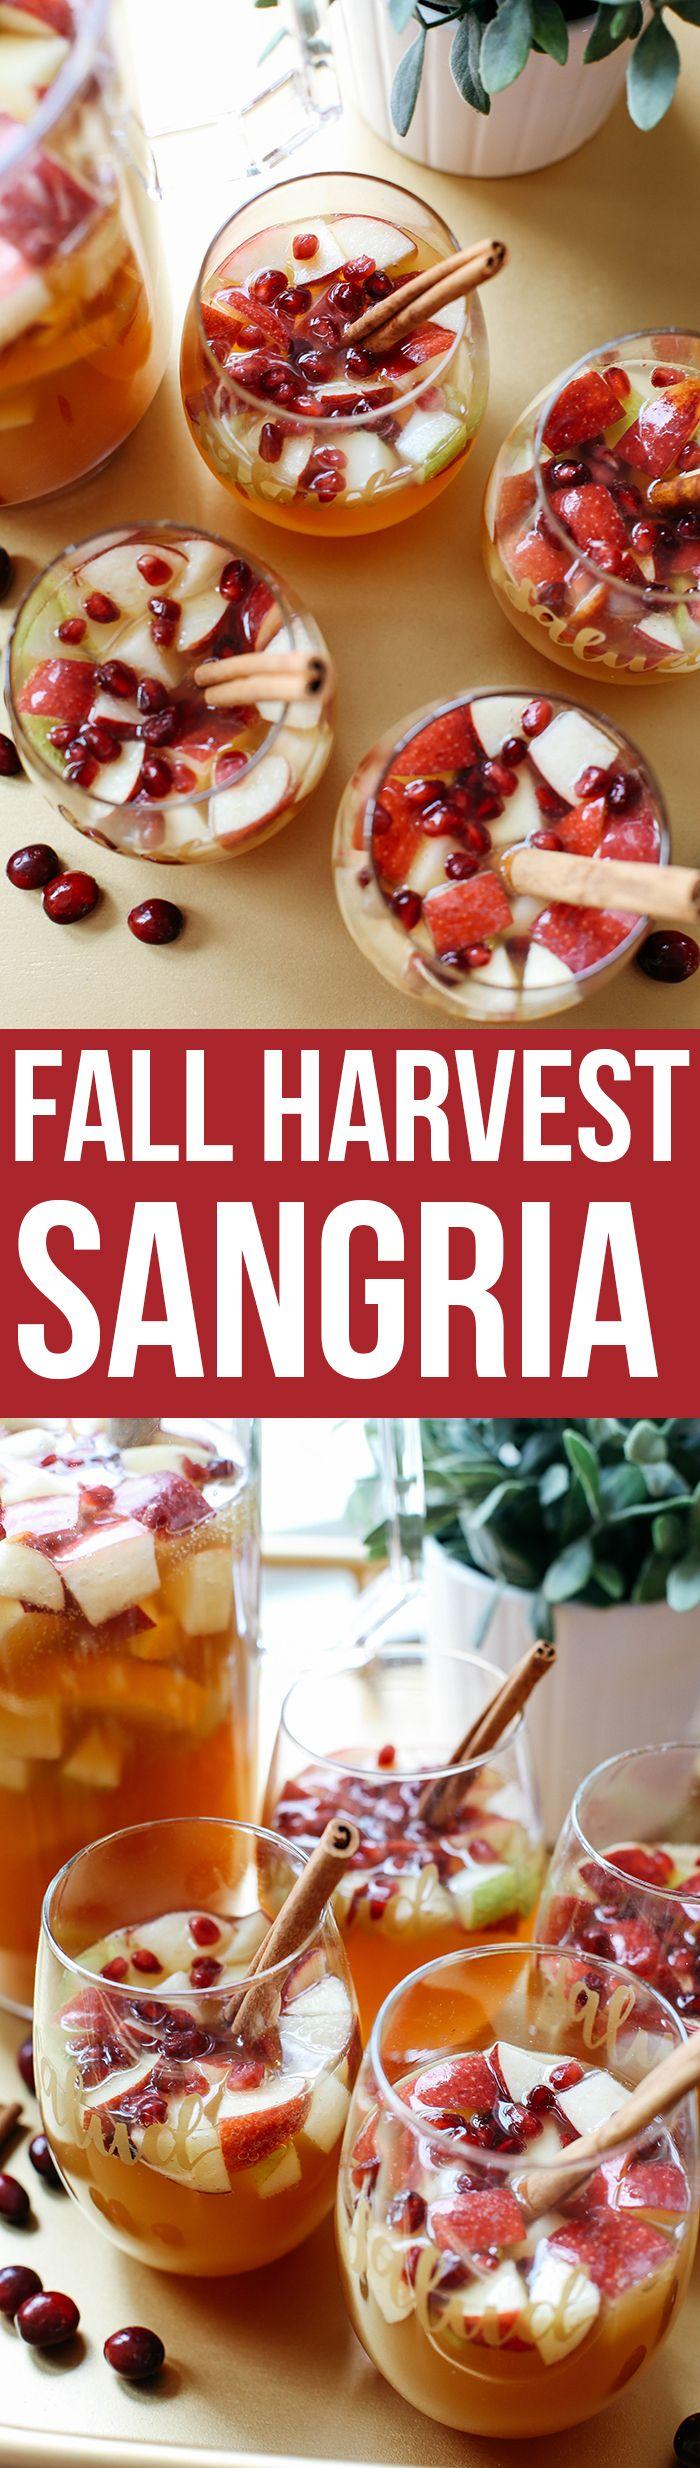 Wedding - Fall Harvest Sangria